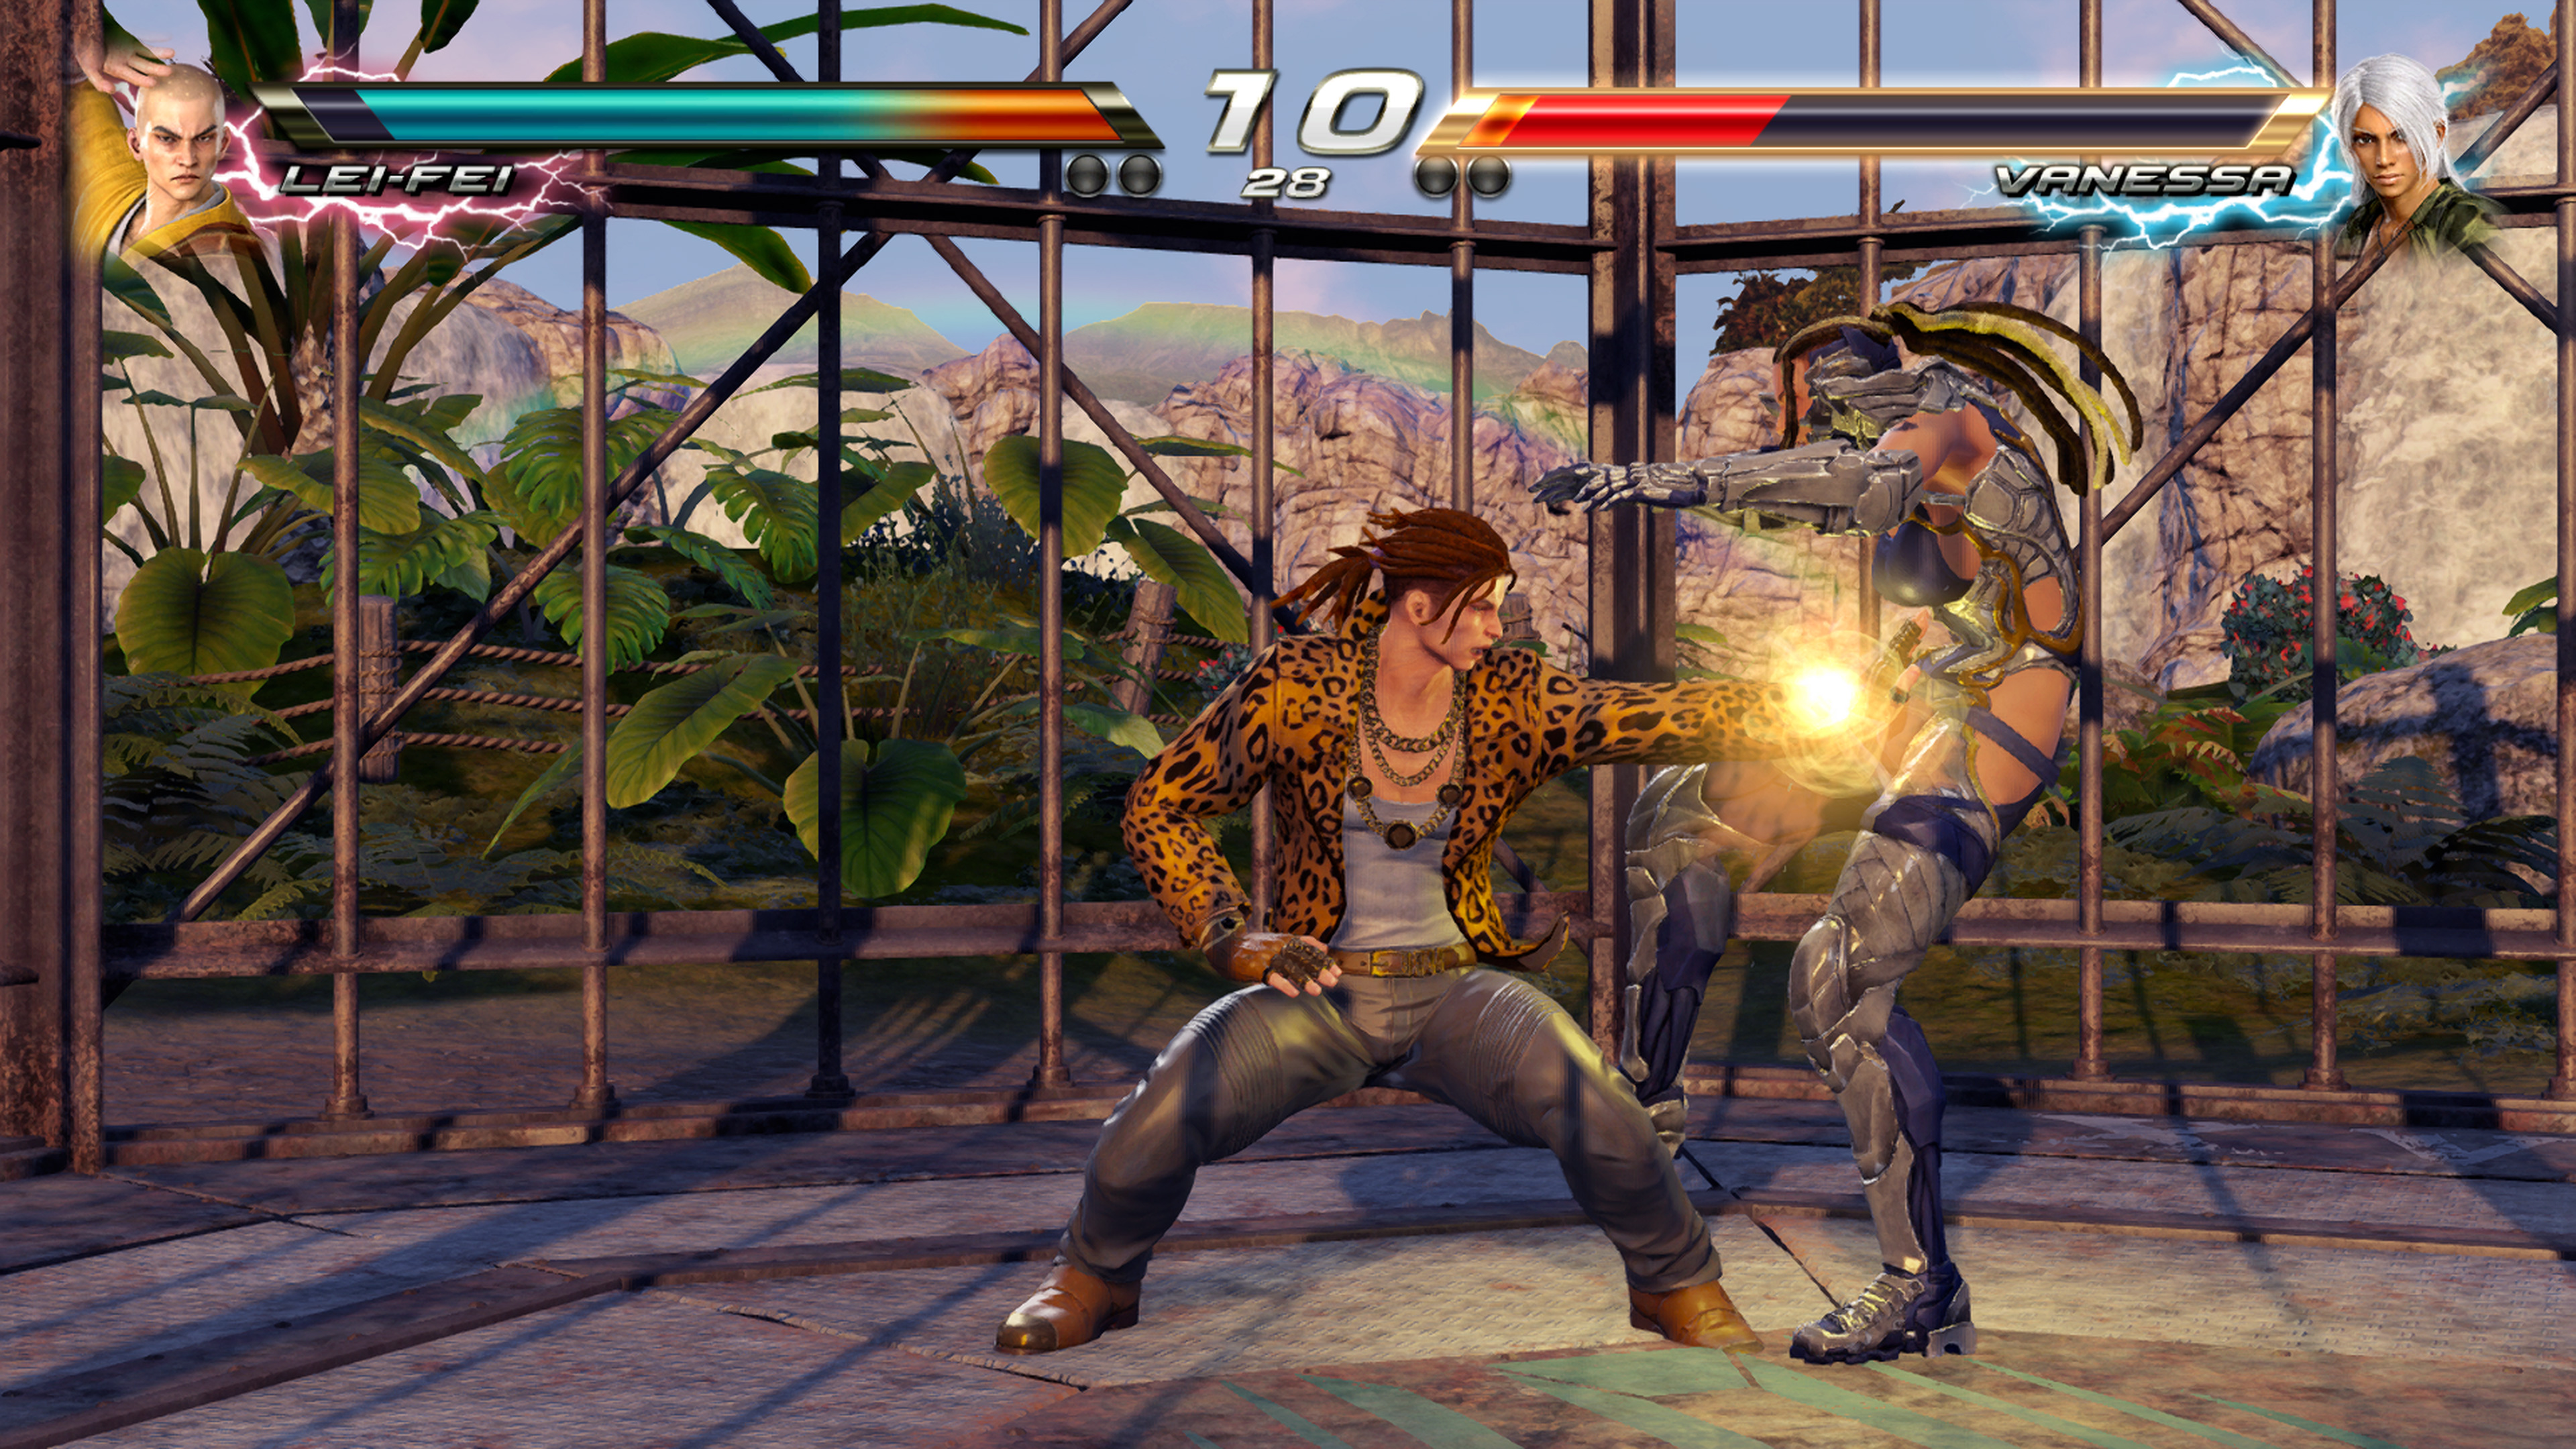 Скриншот №8 к Virtua Fighter 5 Ultimate Showdown основная игра + набор TEKKEN 7 DLC Pack